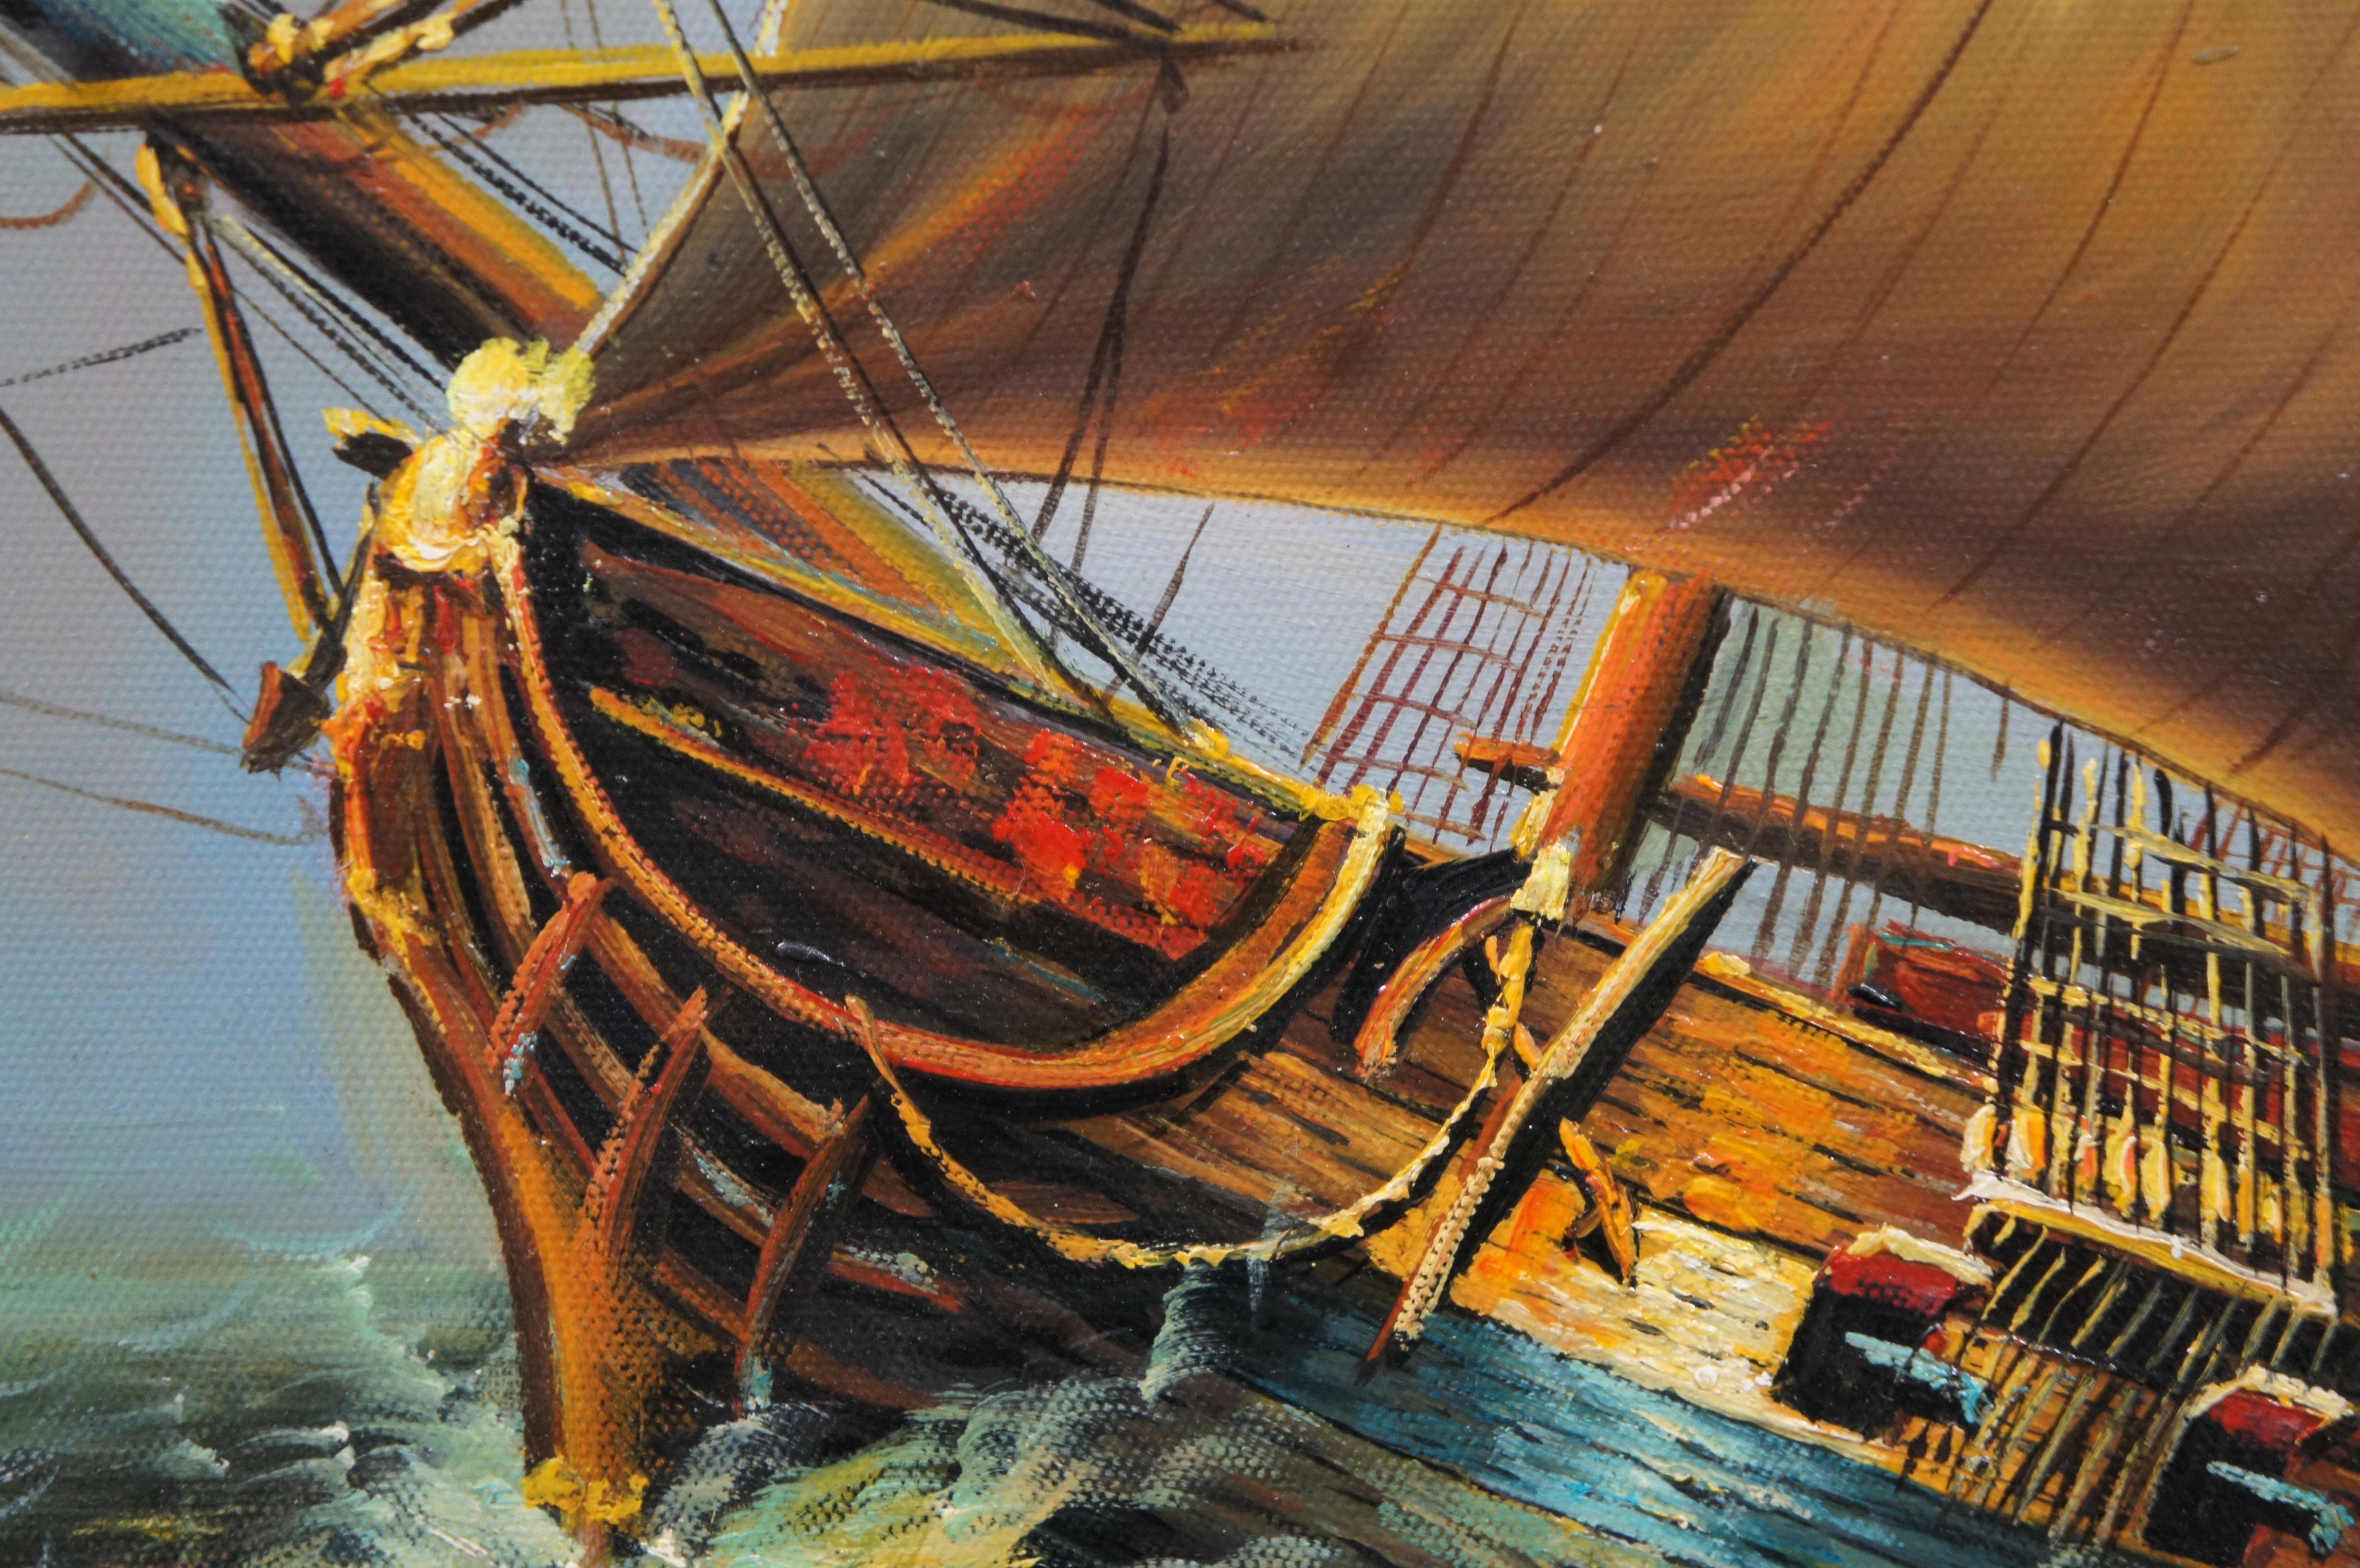 Vintage British Baroque Nautical Maritime Ship Galleon Seascape Oil Painting 51